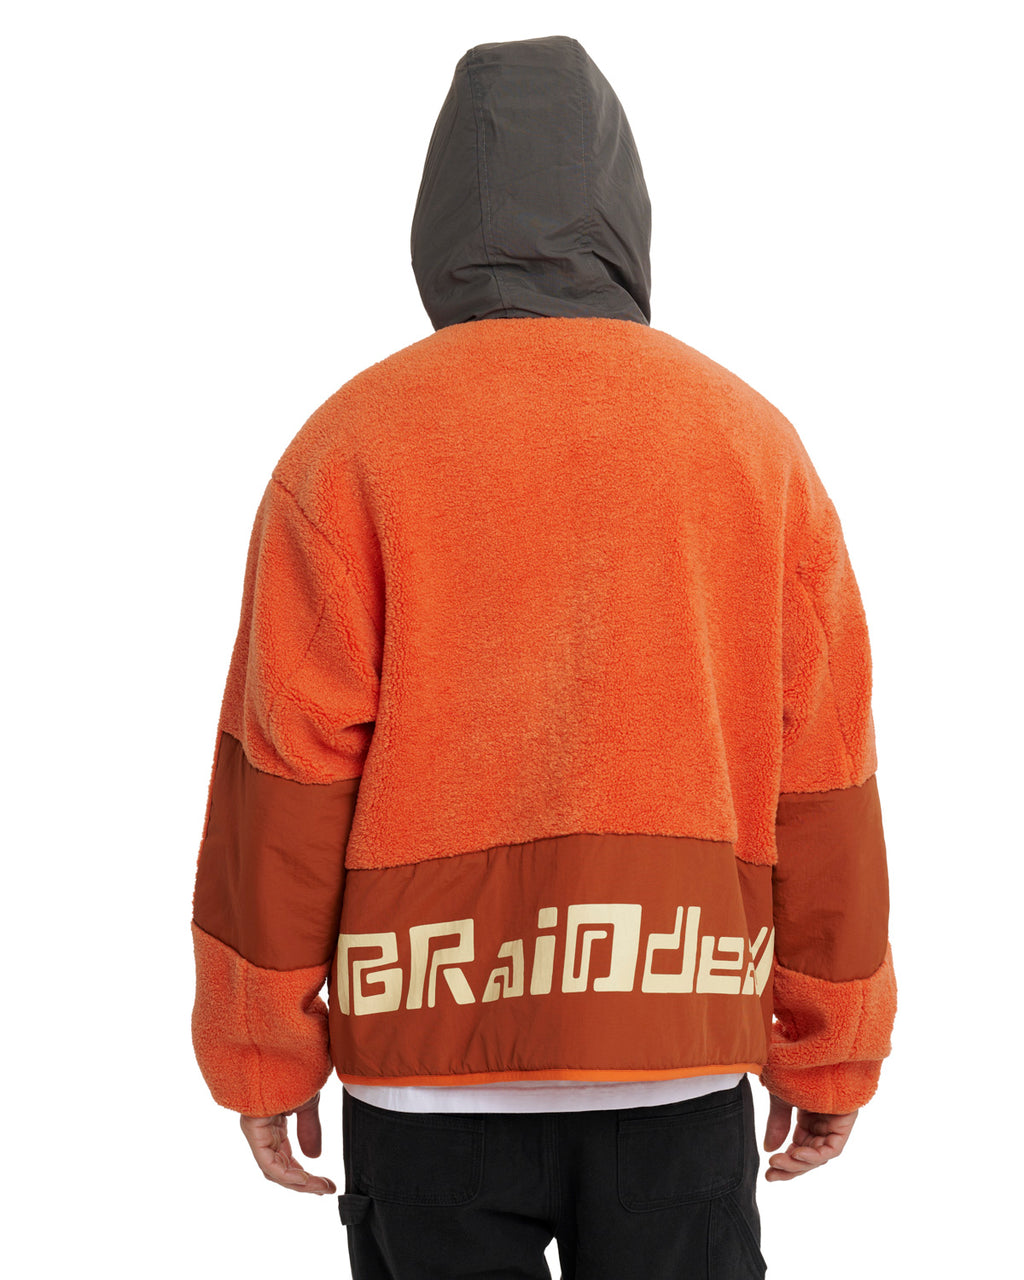 Levels Sherpa Full Zip Jacket - Orange 8